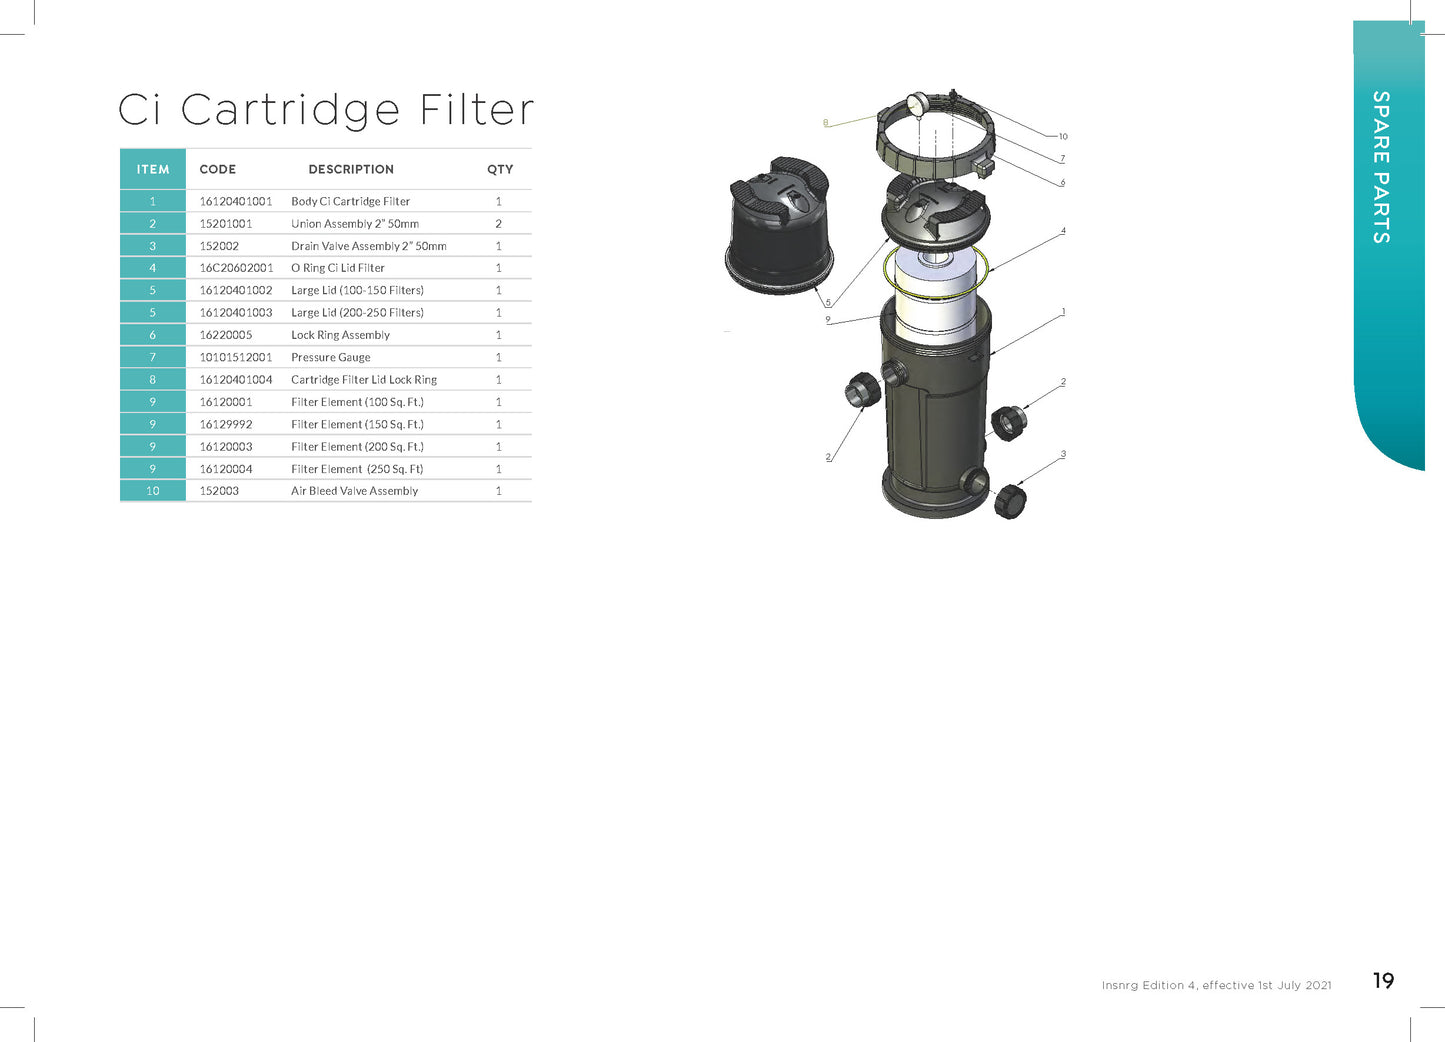 Cartridge Filter Body - Insnrg Ci Cartridge Filters [16120401001]